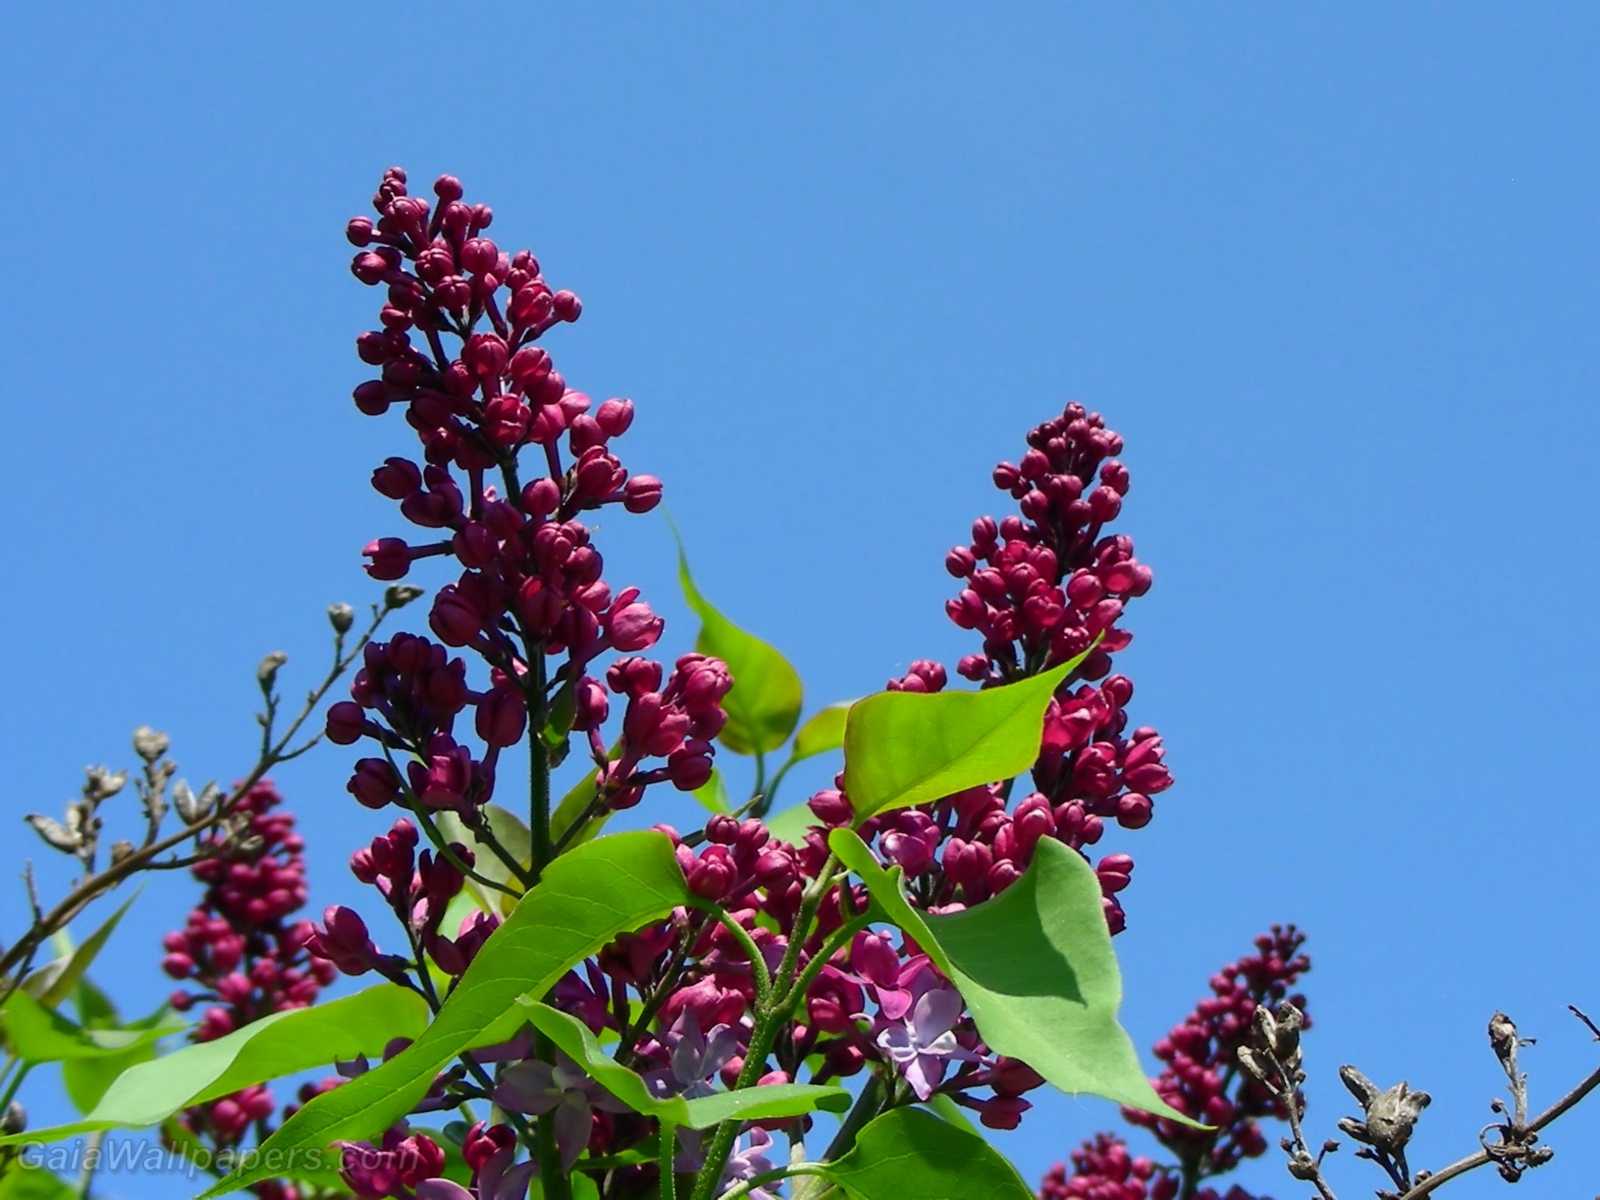 Lilacs in the blue sky - Free desktop wallpapers